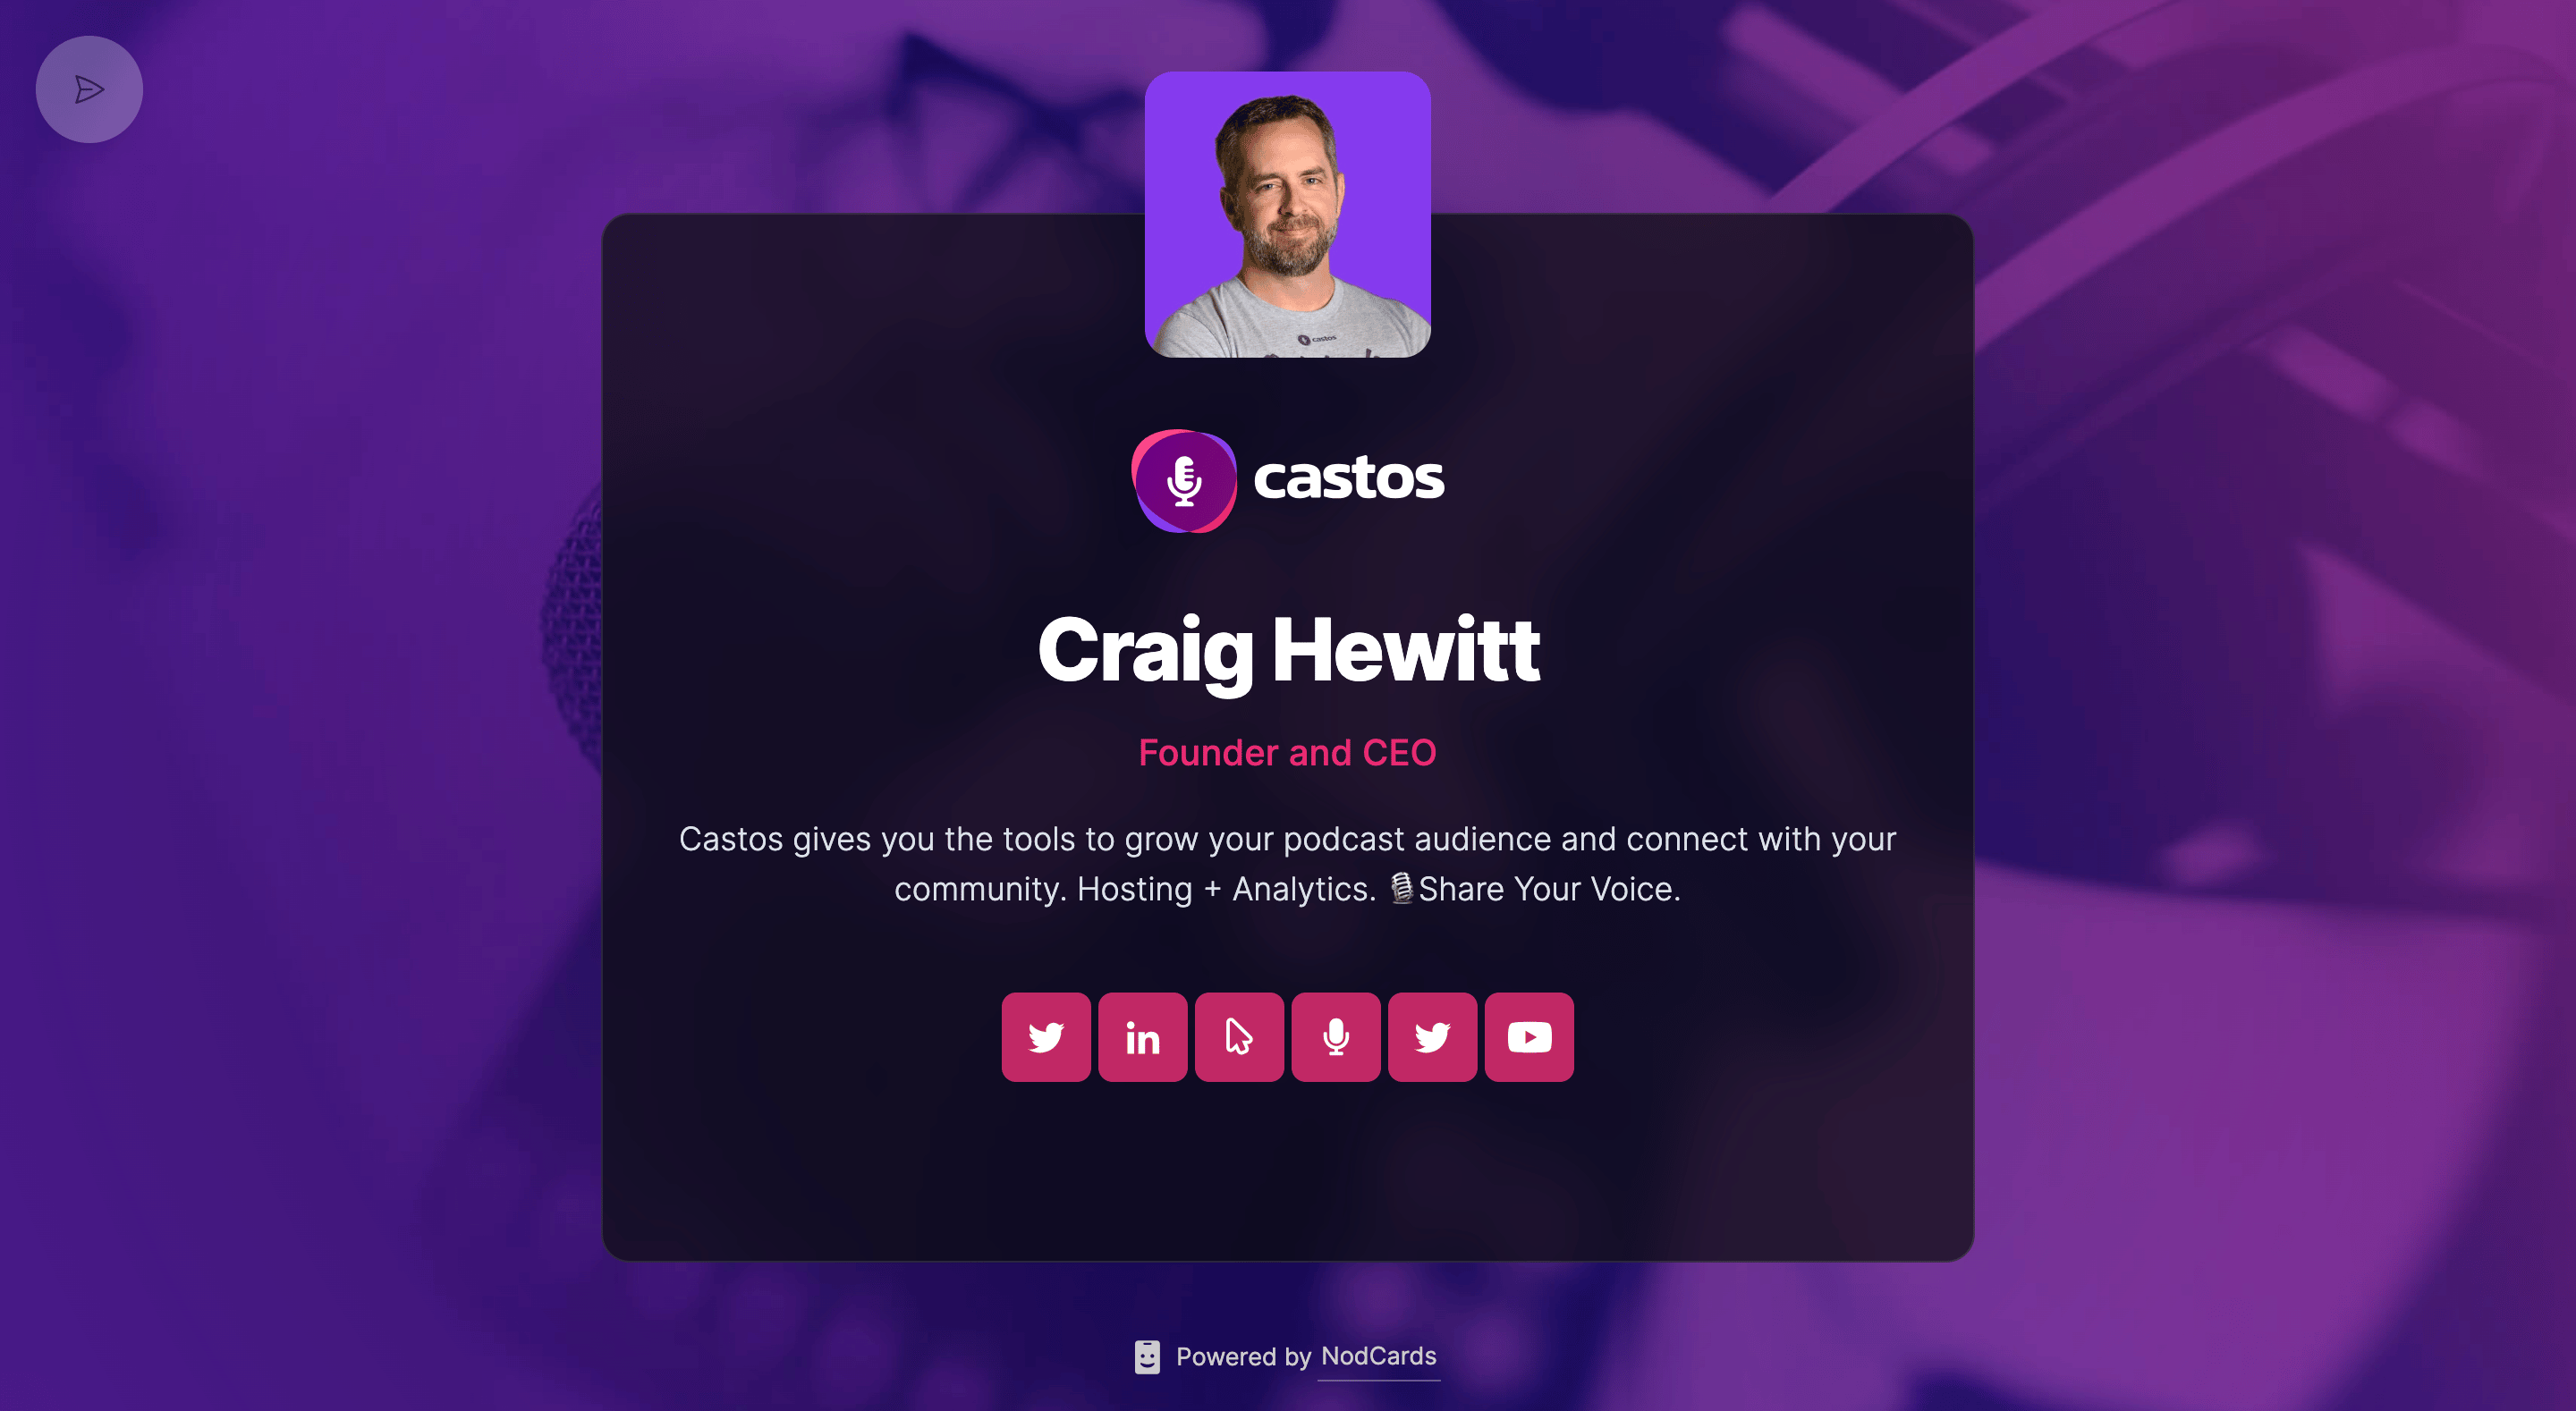 Digital business card for Craig Hewitt at Castos